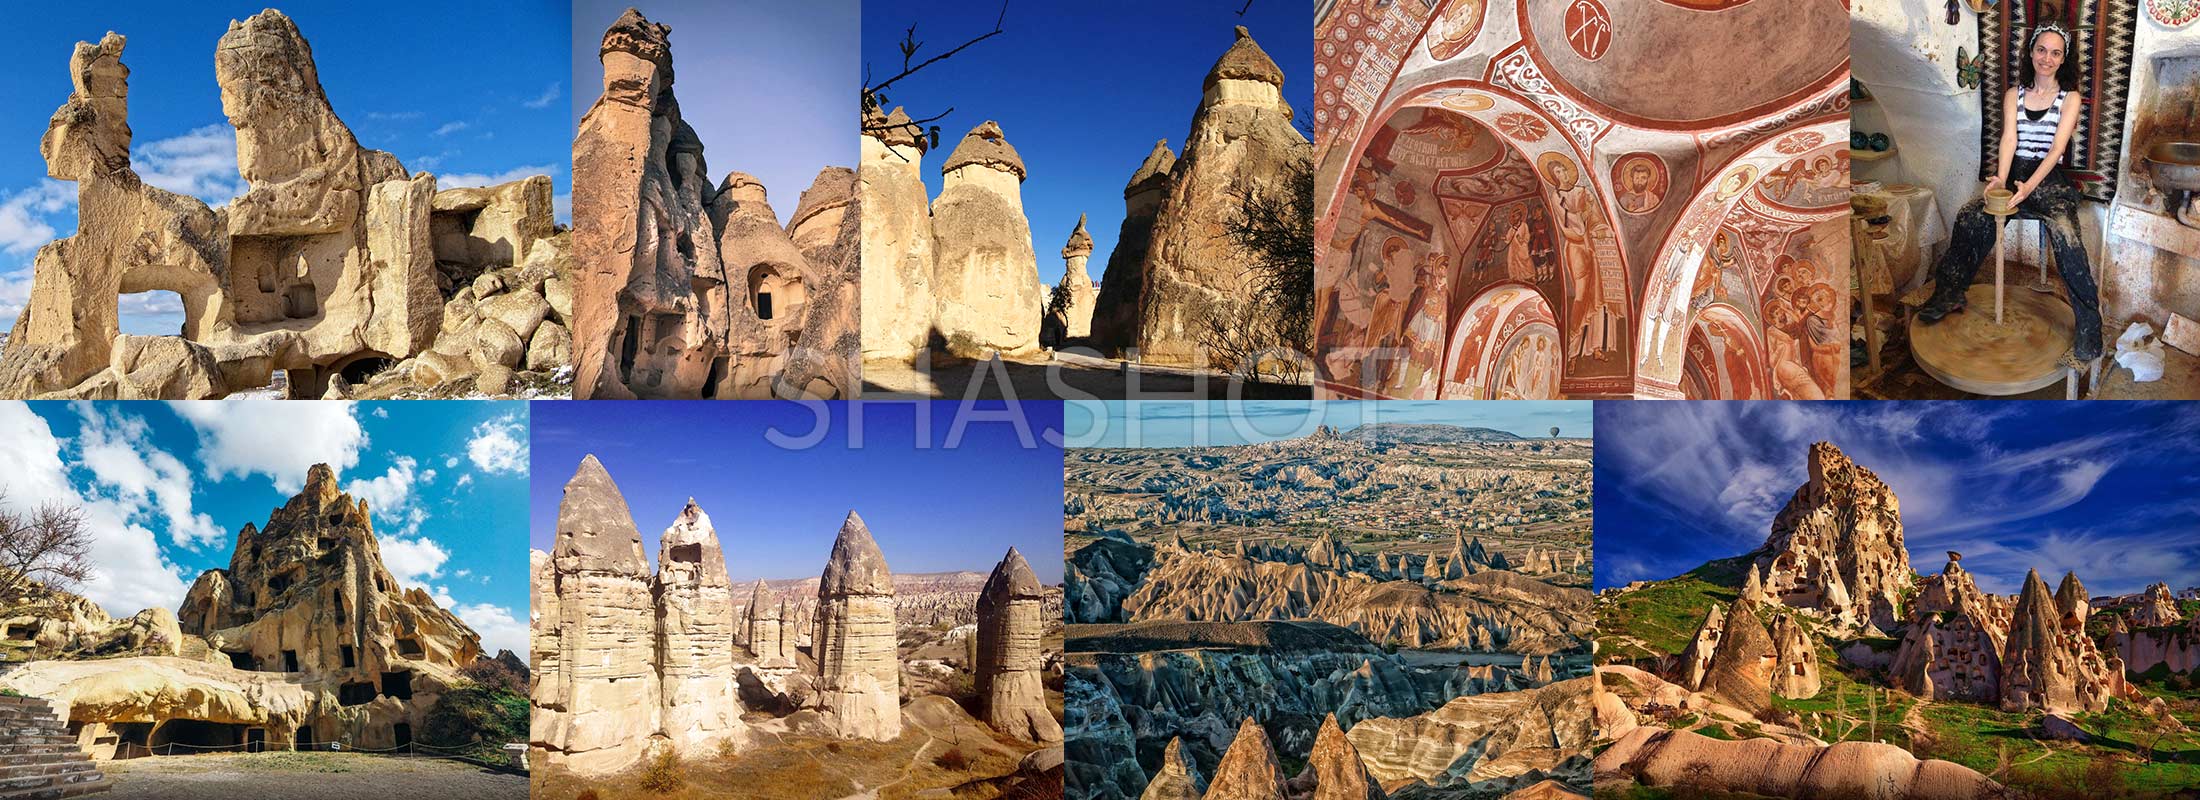 turquia-excursion-tours-7-dias-estambul-santa-sofia-museo-azul-mezquita-capadocia-virgen-maria-casa-efeso-pamukkale-hierapolis-sirince